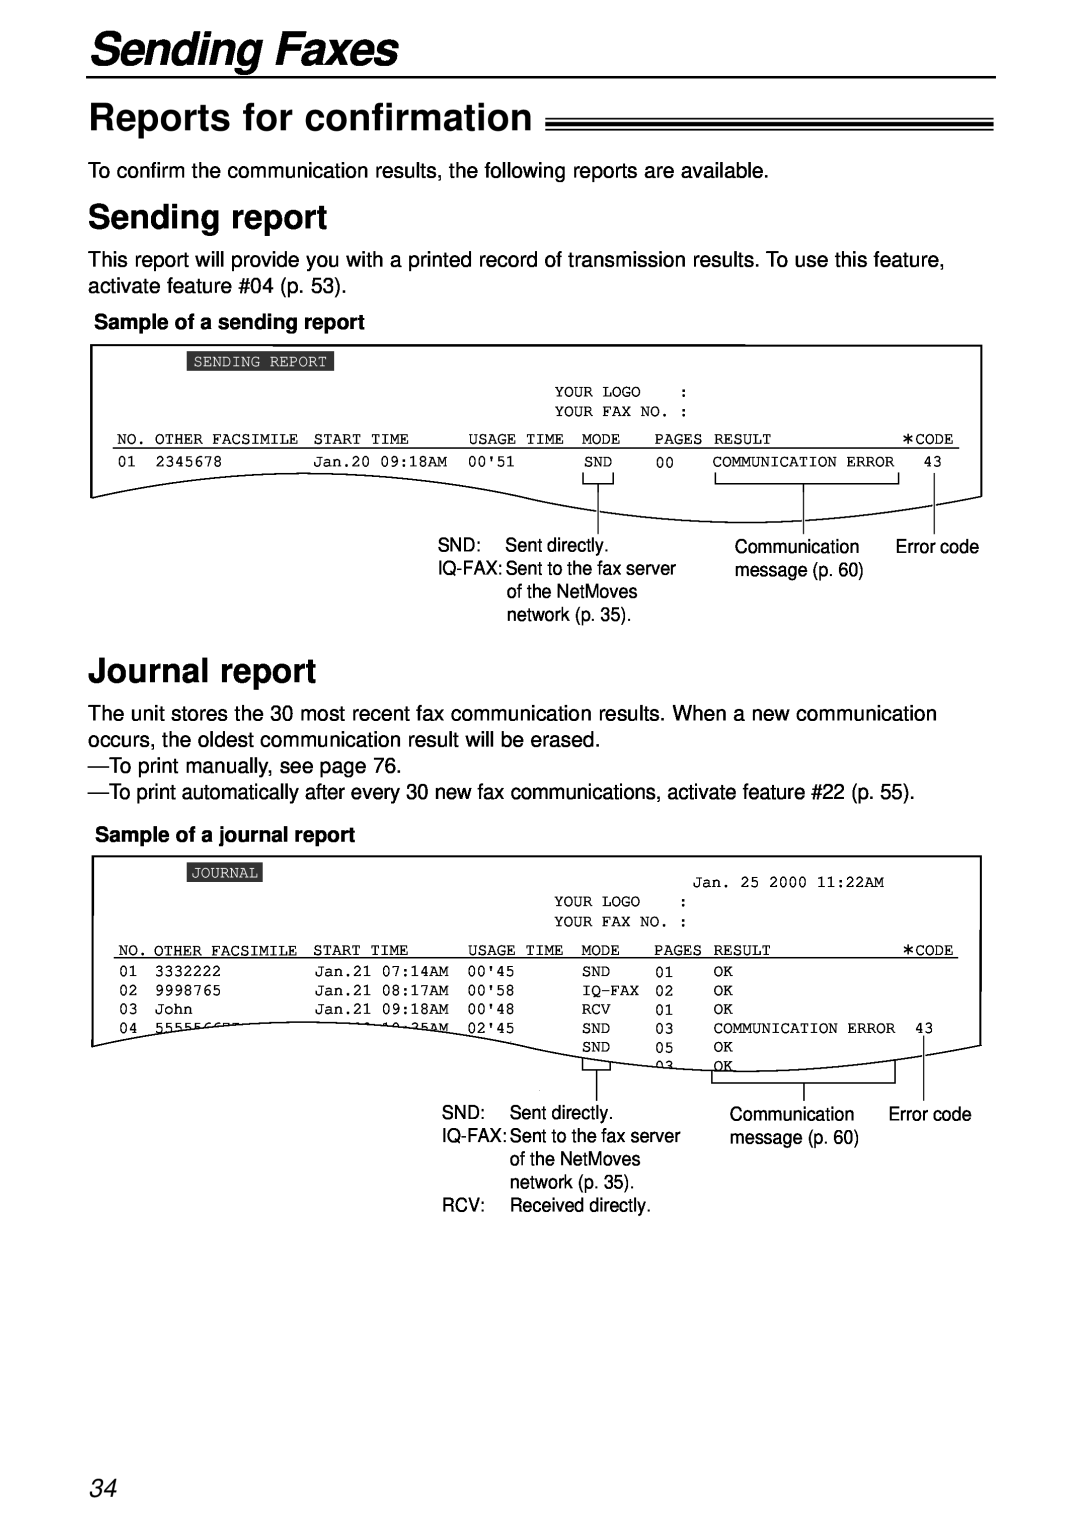 Panasonic KX-FL501 Reports for confirmation, Sending report, Journal report, Sending Faxes, Sample of a sending report 